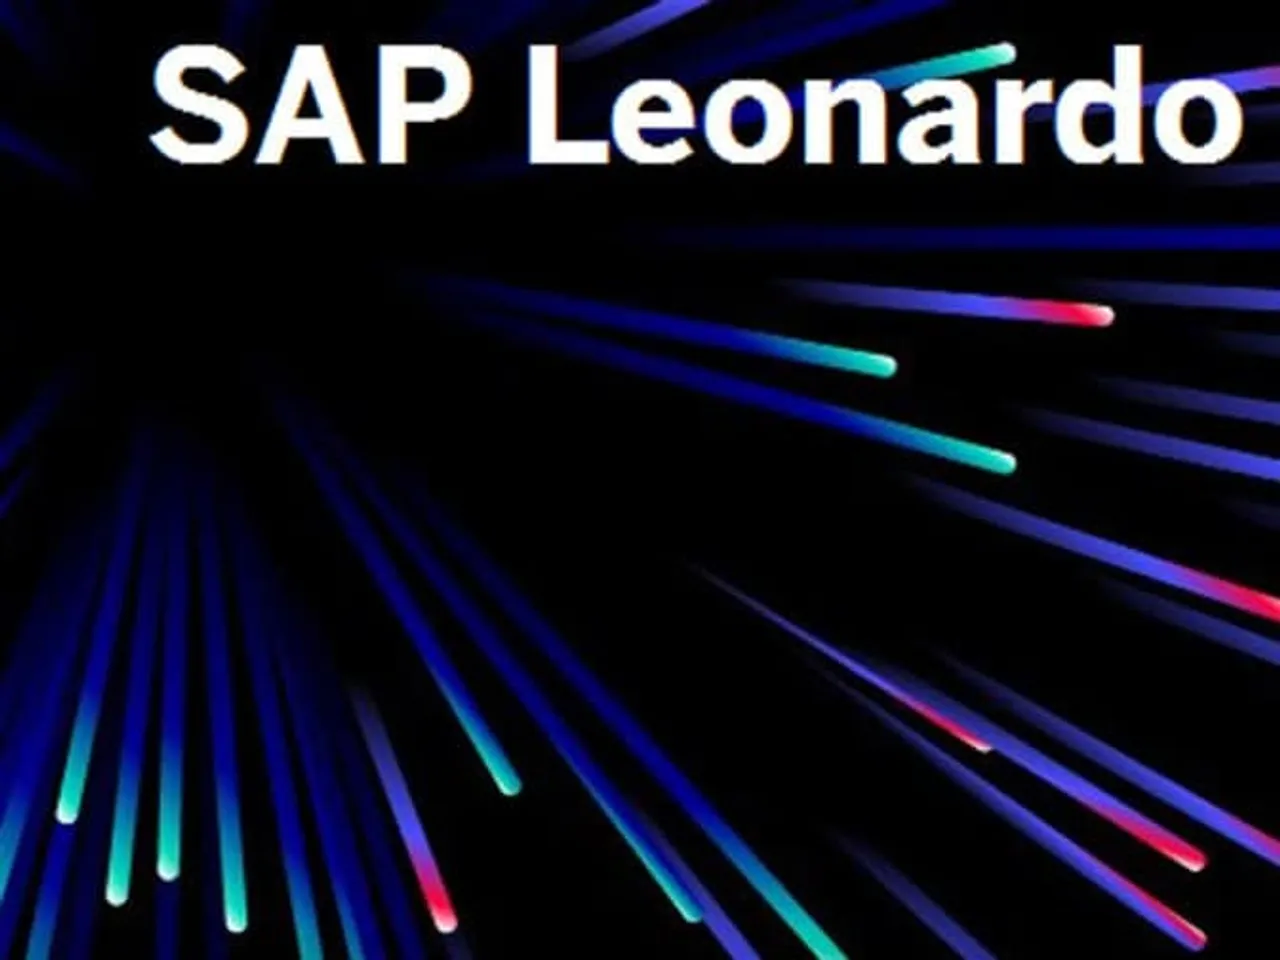 SAP Leonardo Center, Bangalore - Launched